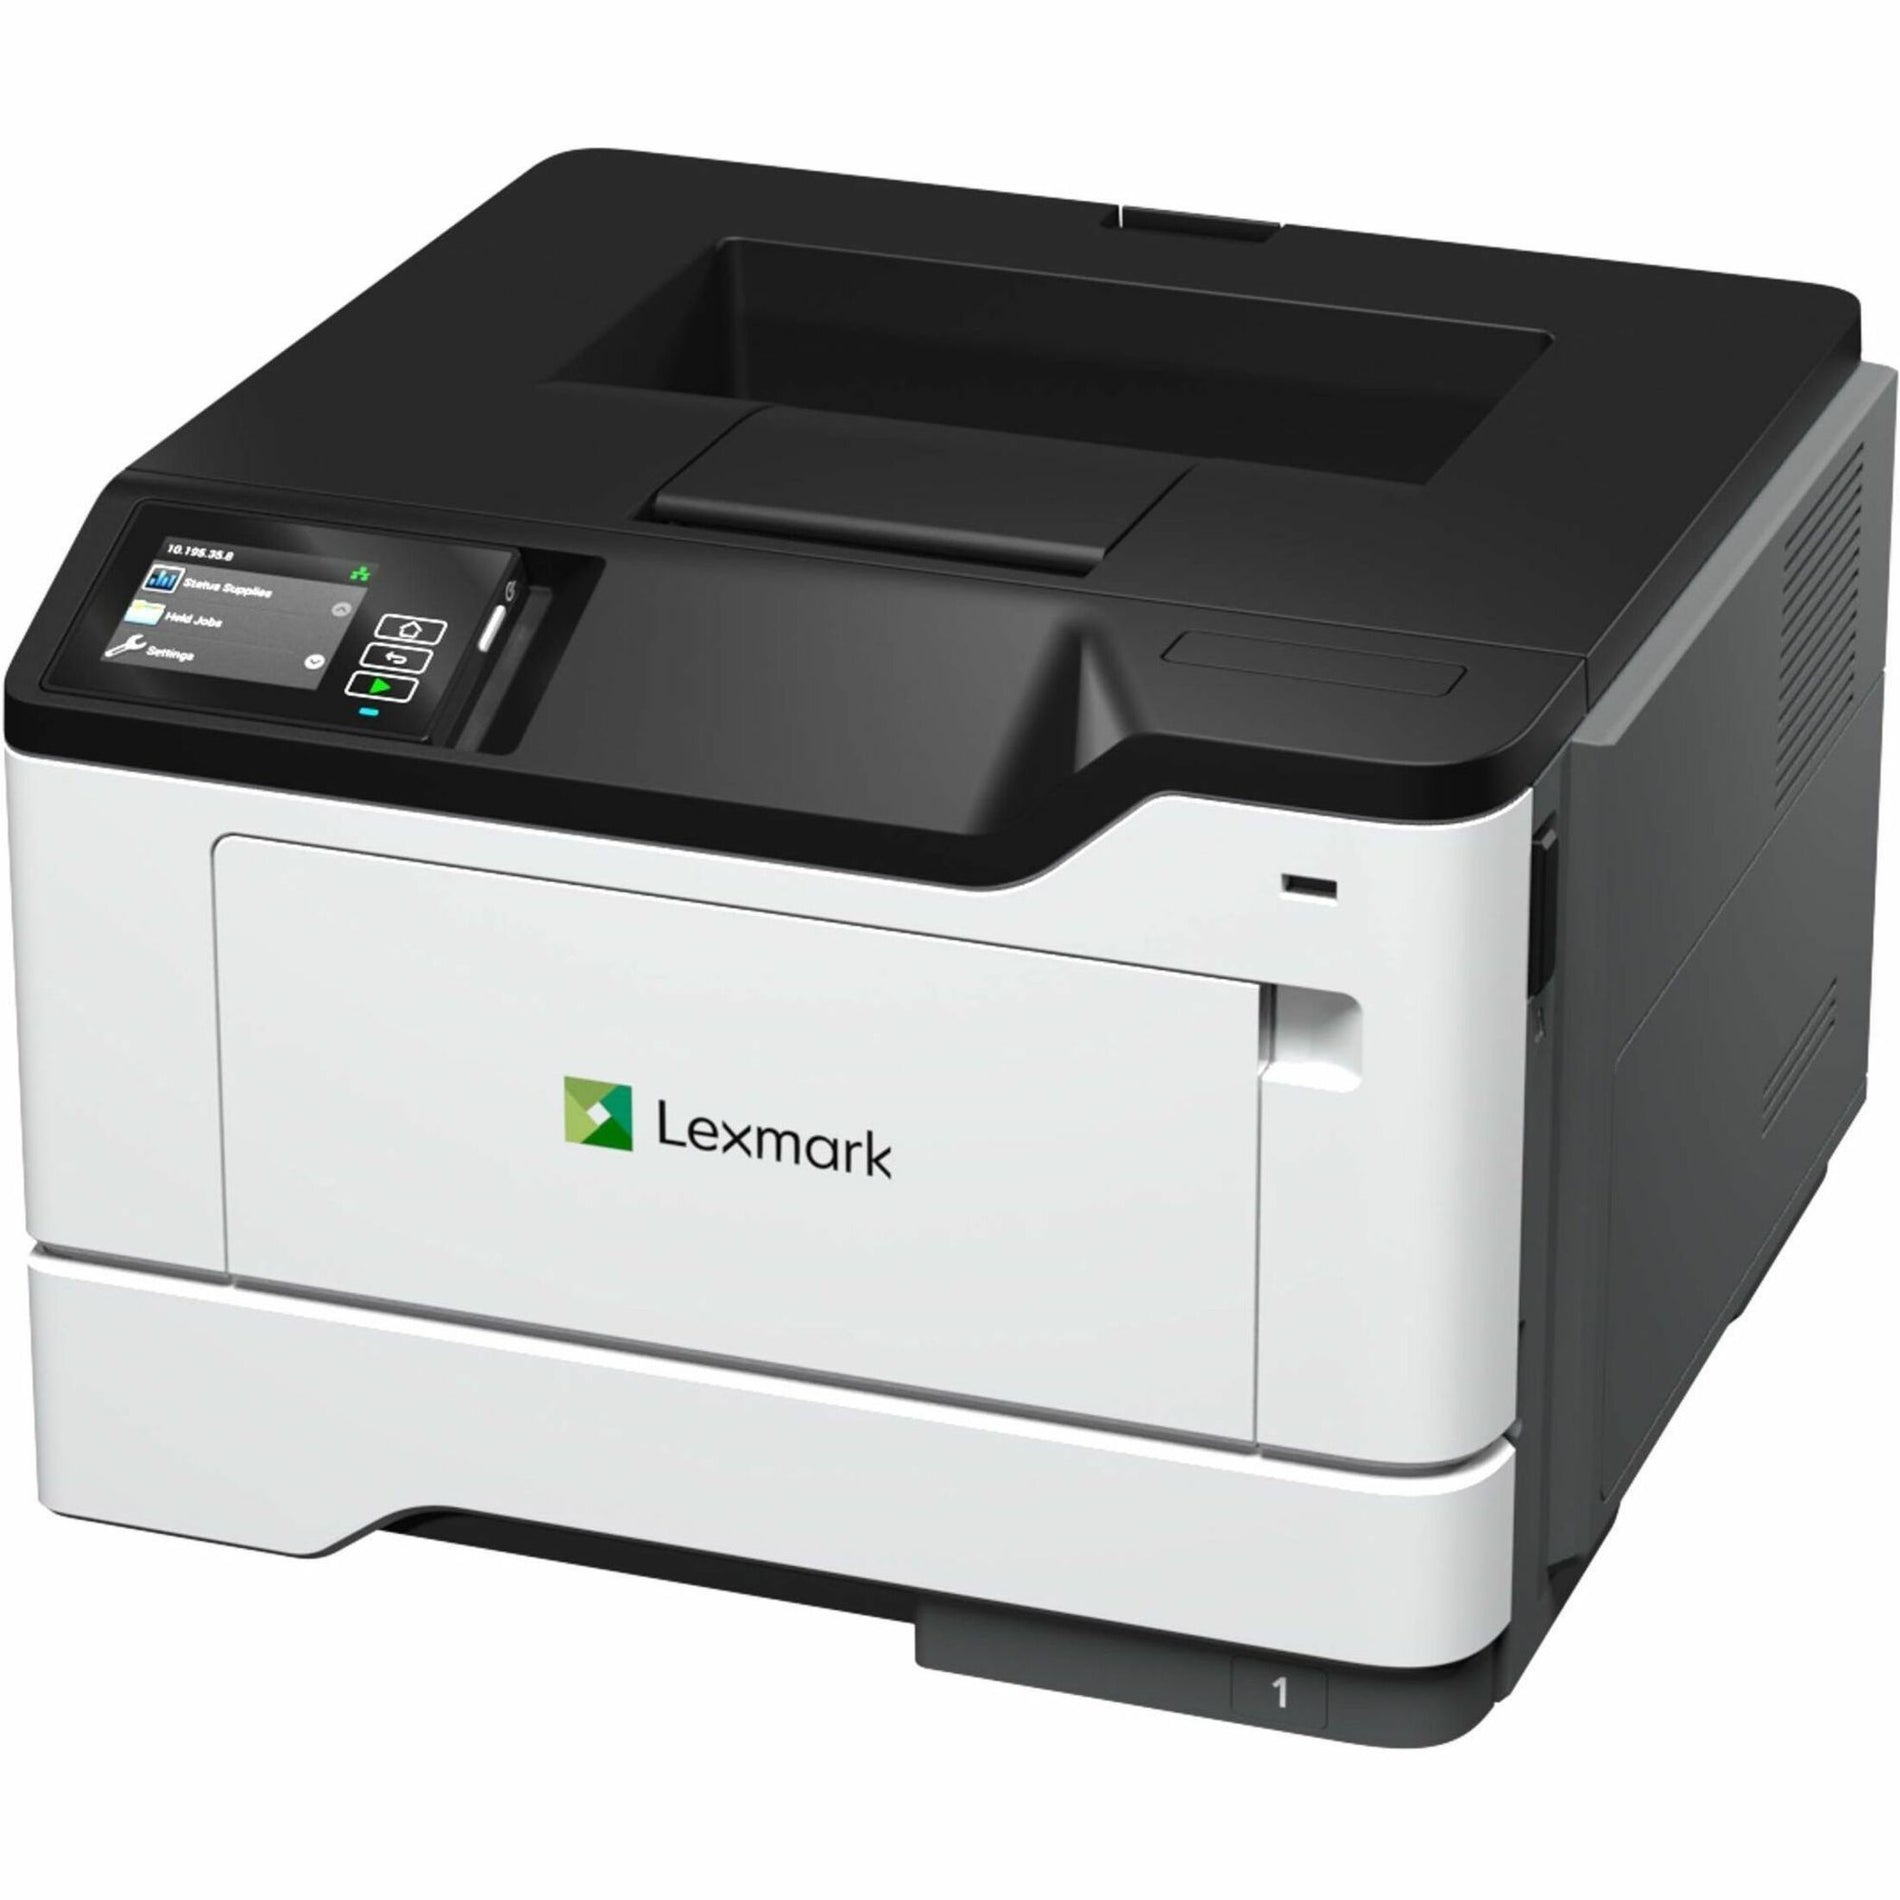 Lexmark 38S0300 MS531dw Desktop Wired Laser Printer - Monochrome, TAA Compliant